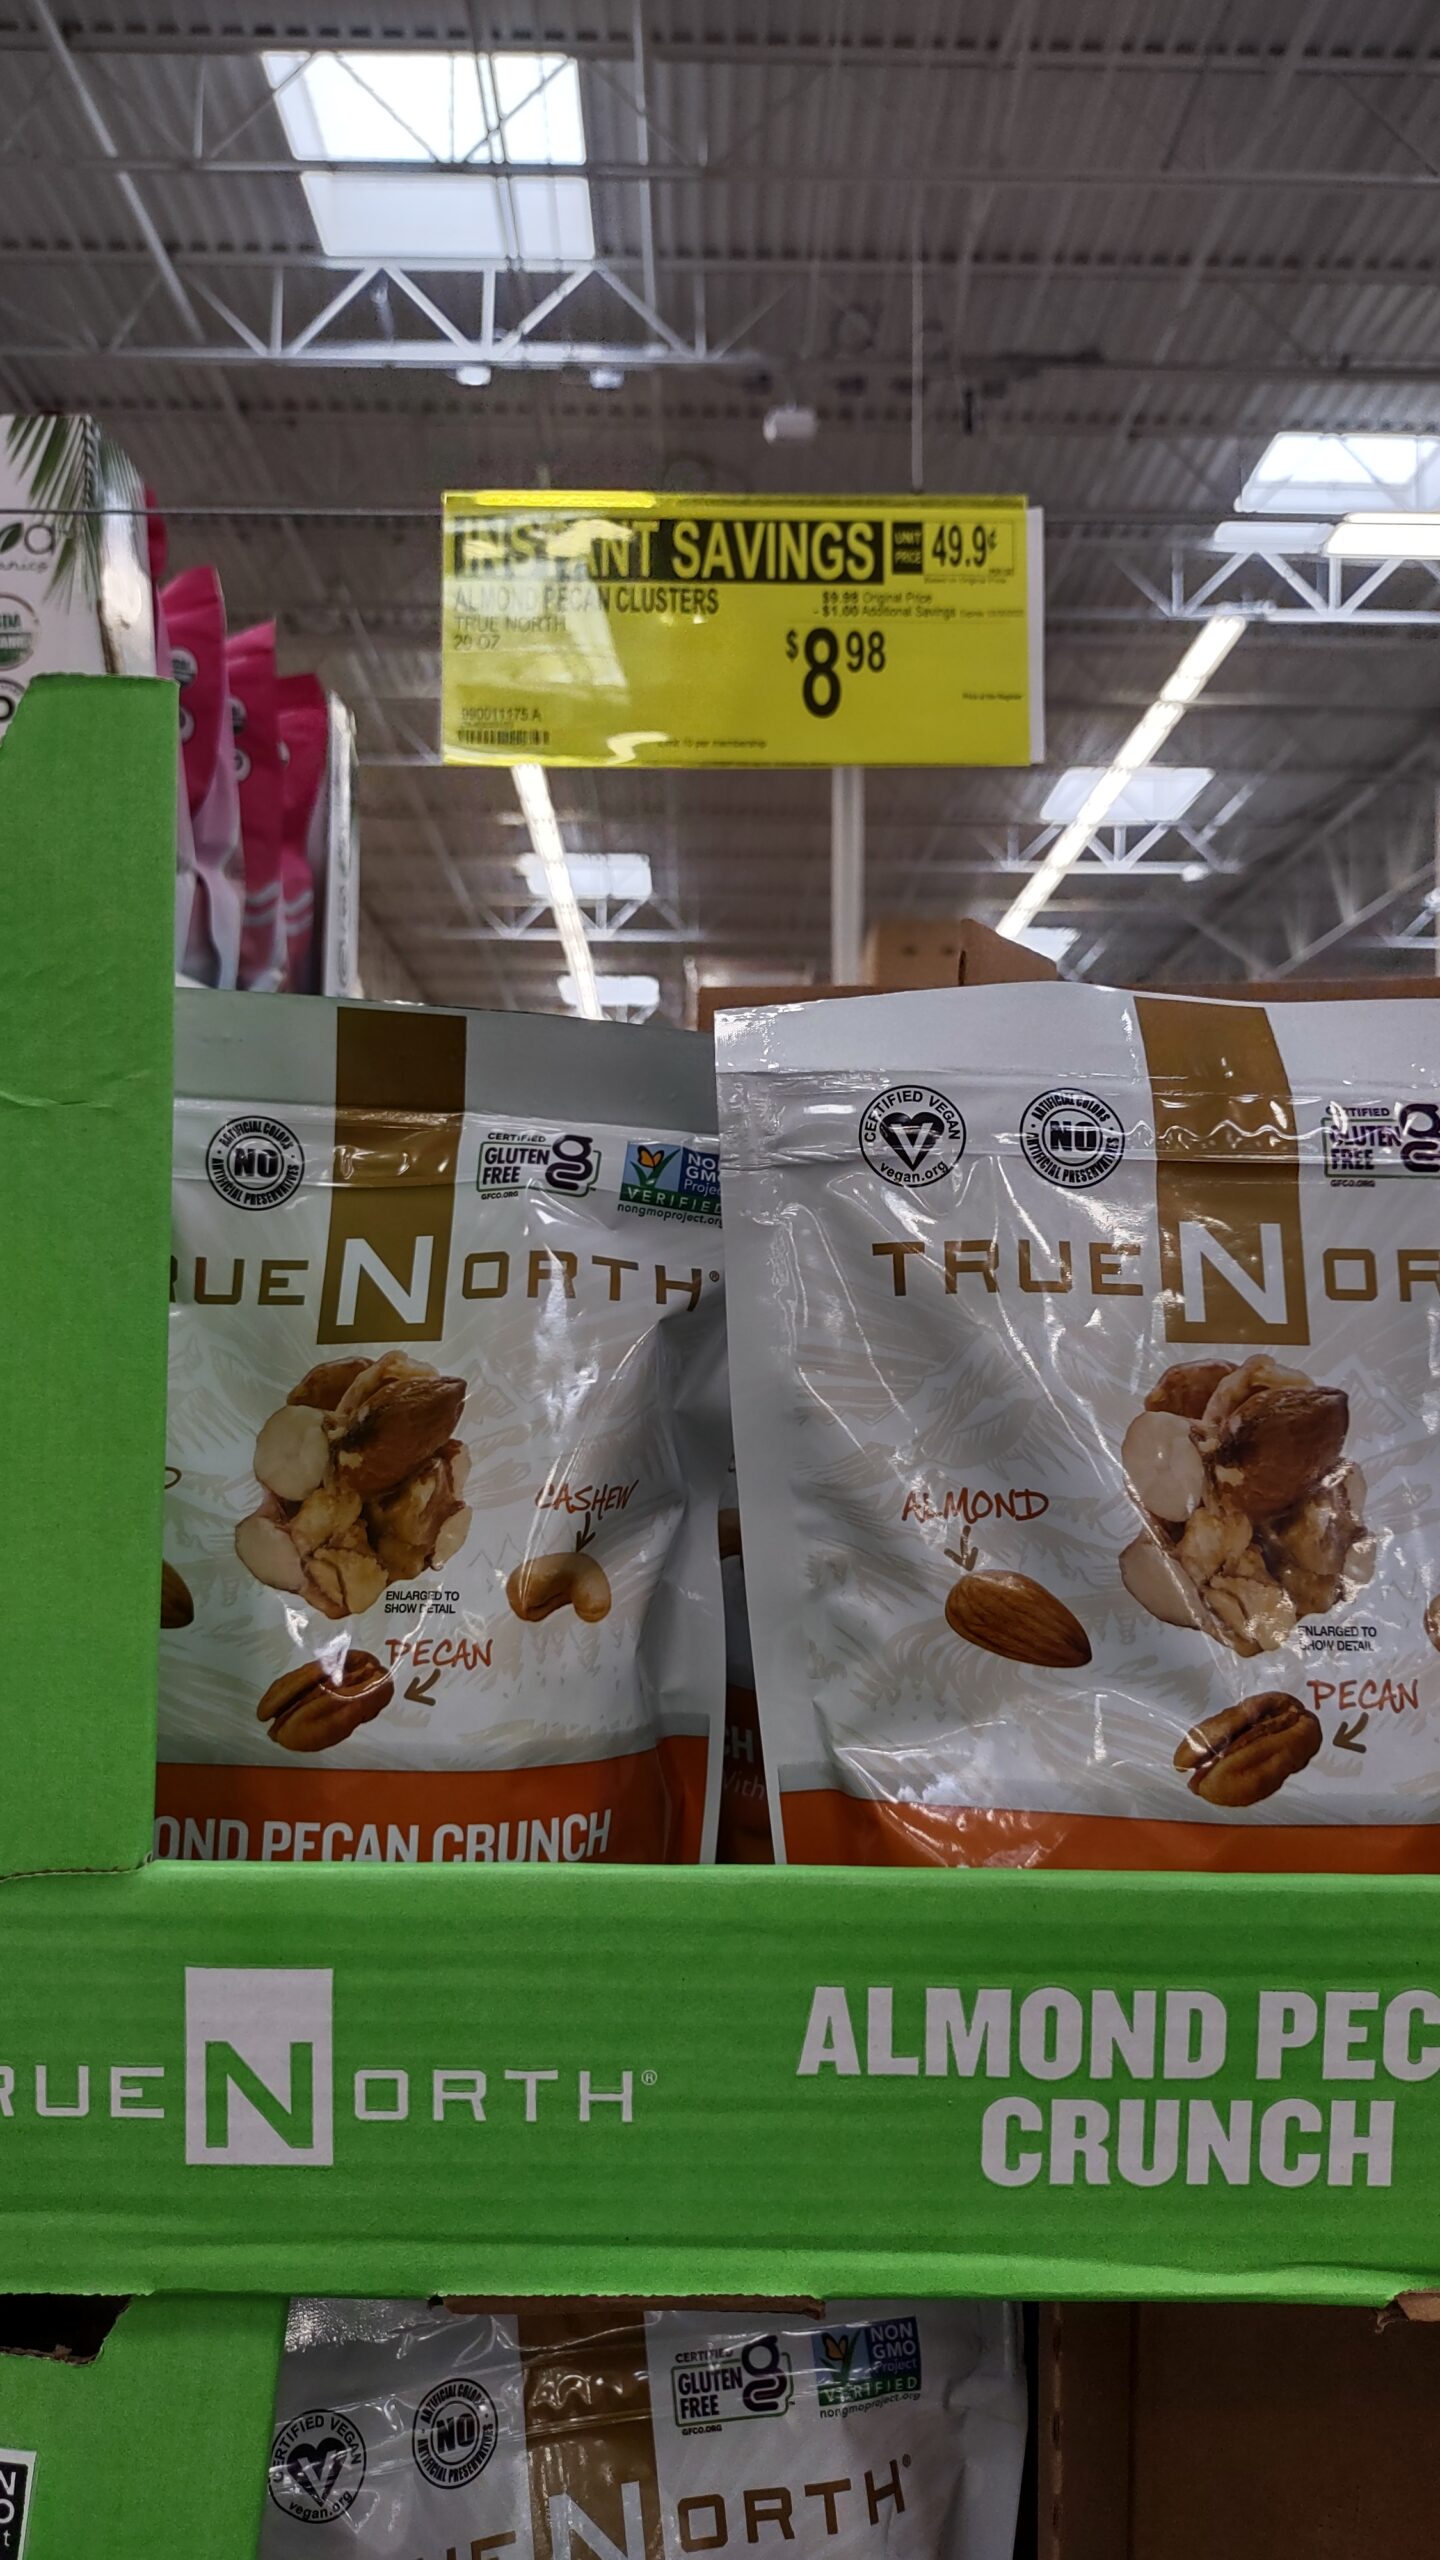 True North Almond Pecan Crunch 20oz $8.98 at Sam’s